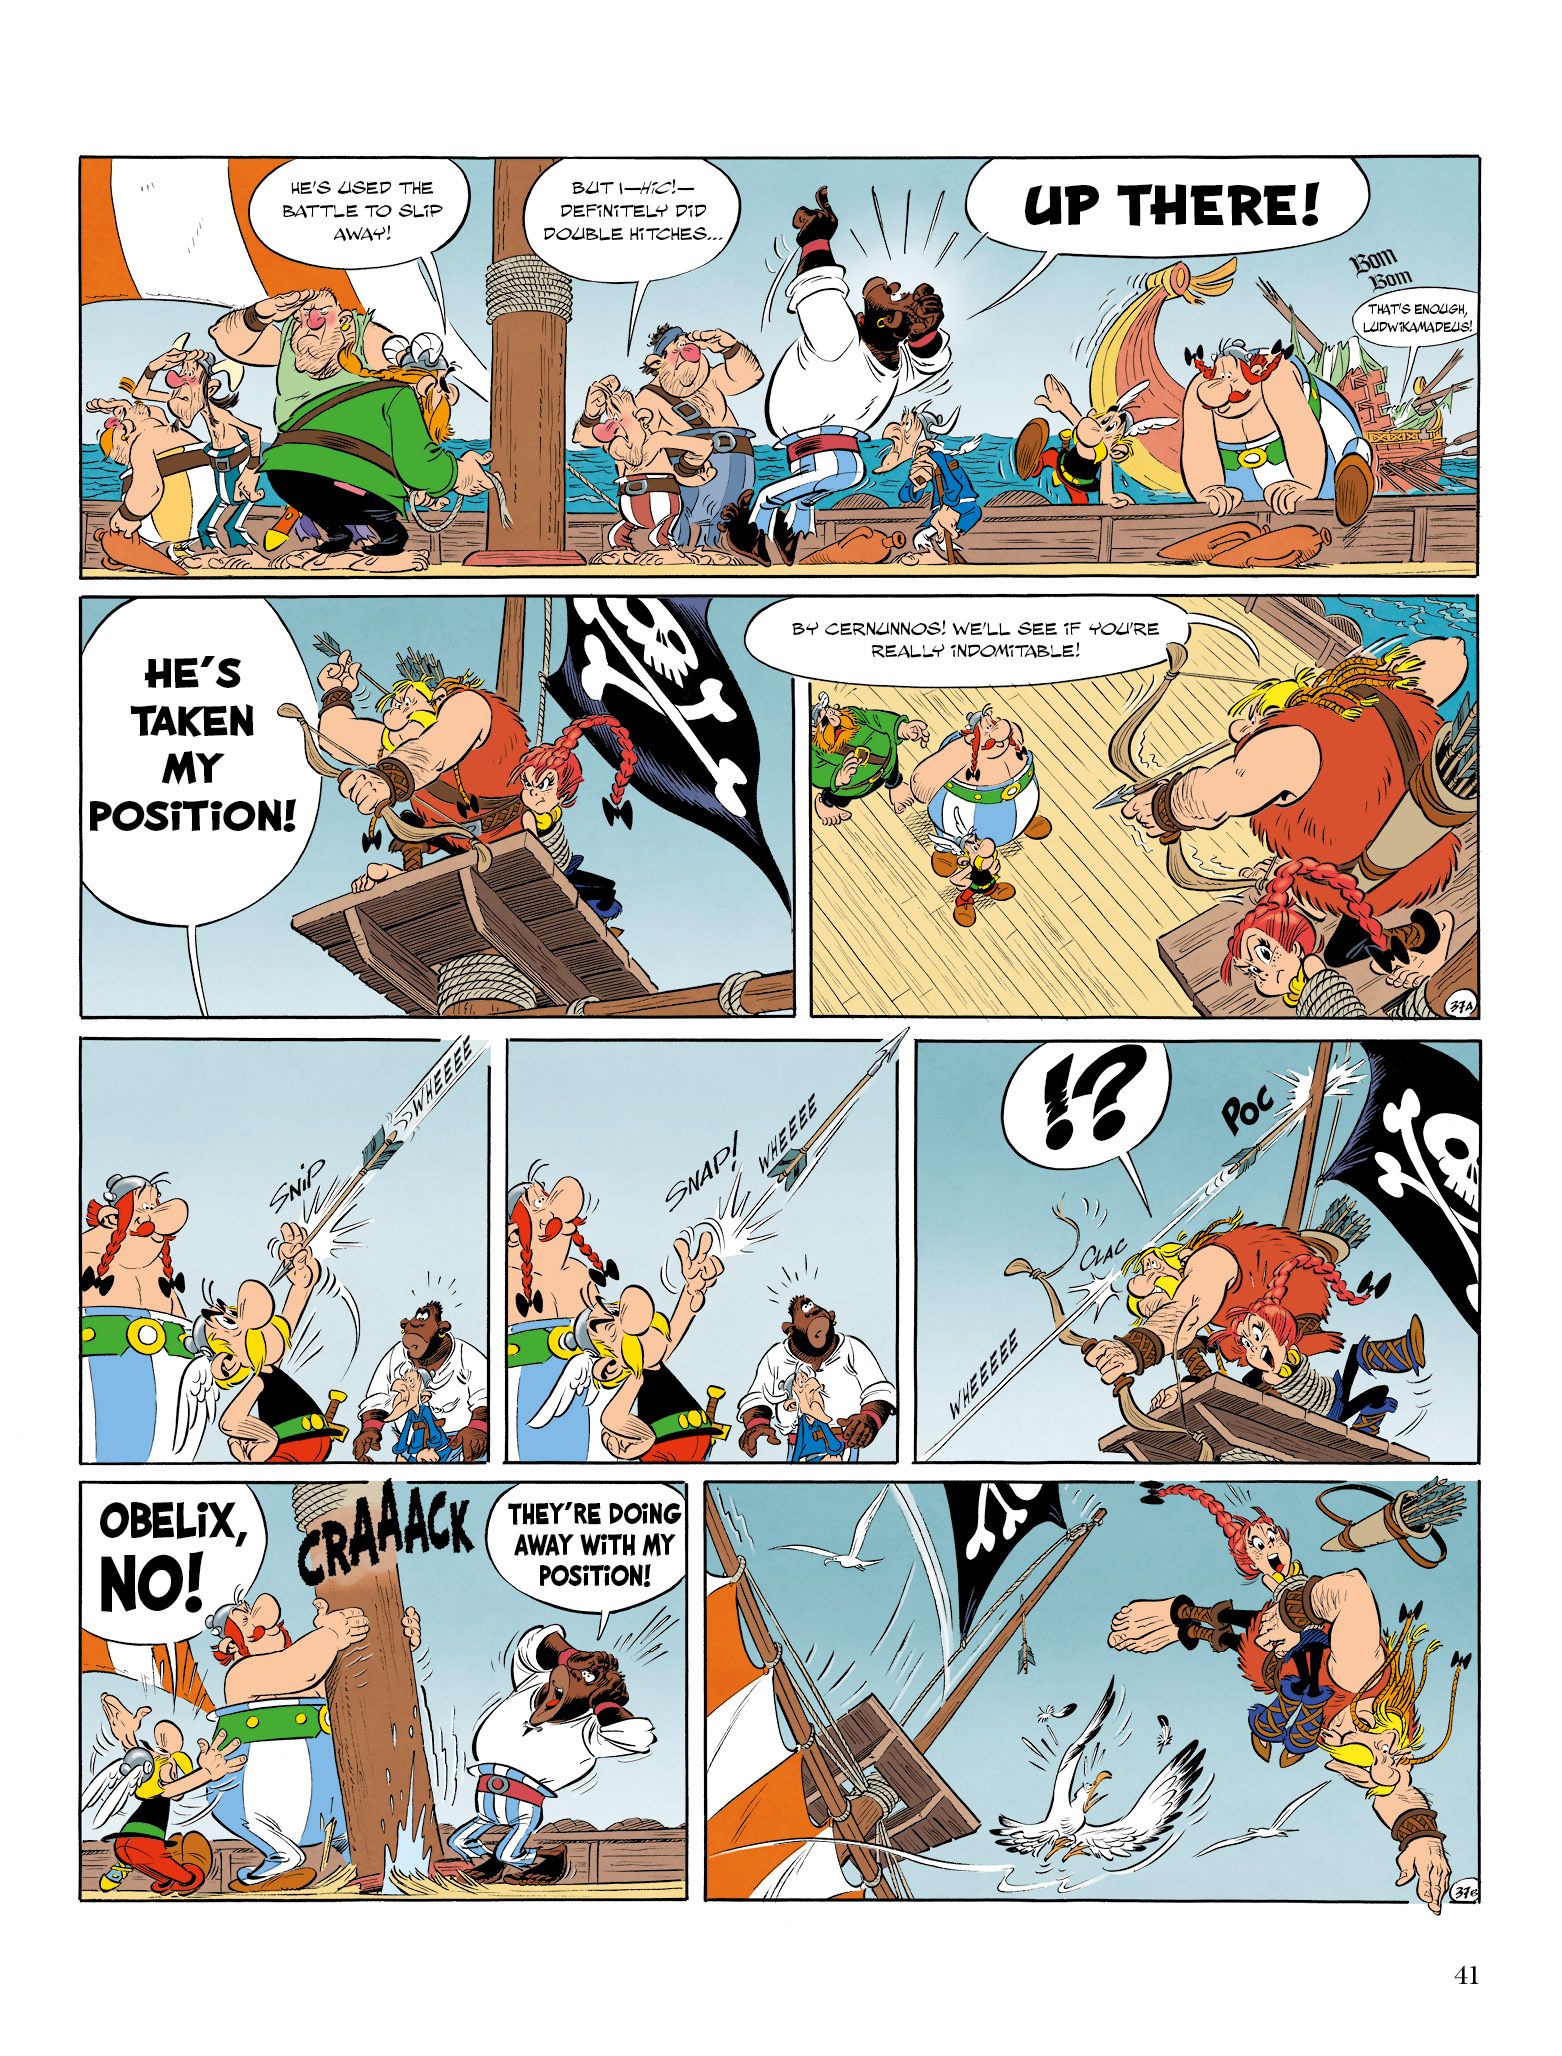 38 Asterix & Obelix Nr 1-38 komplett Top Comic Sammlung 1 x Gratisbeilage 